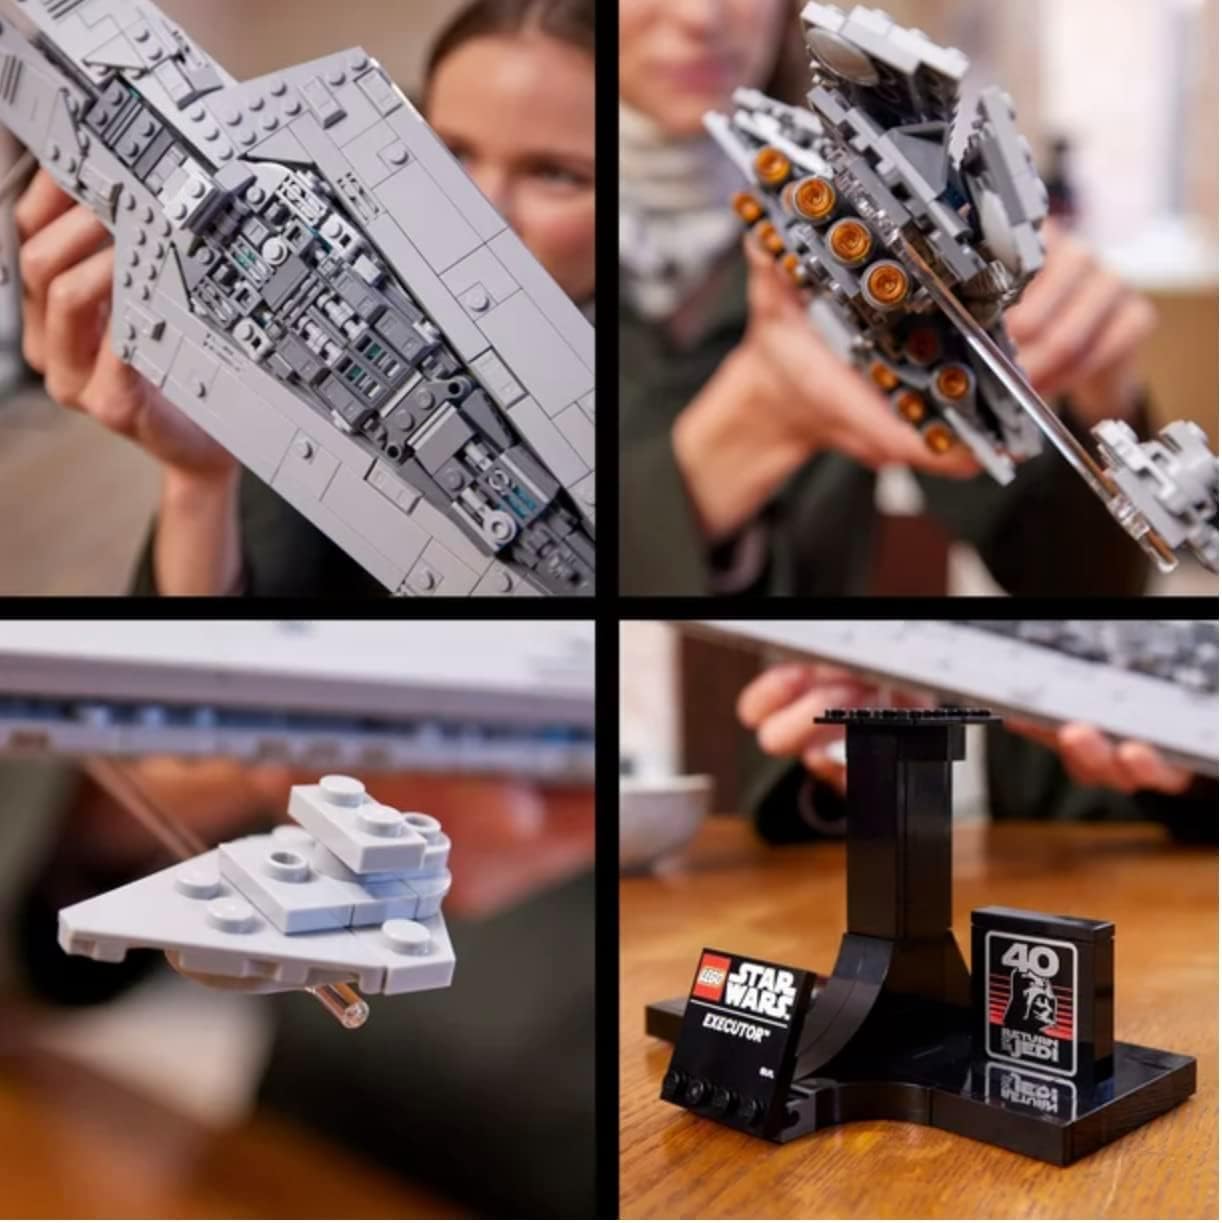 LEGO Star Wars Executor Super Star Destroyer 75356